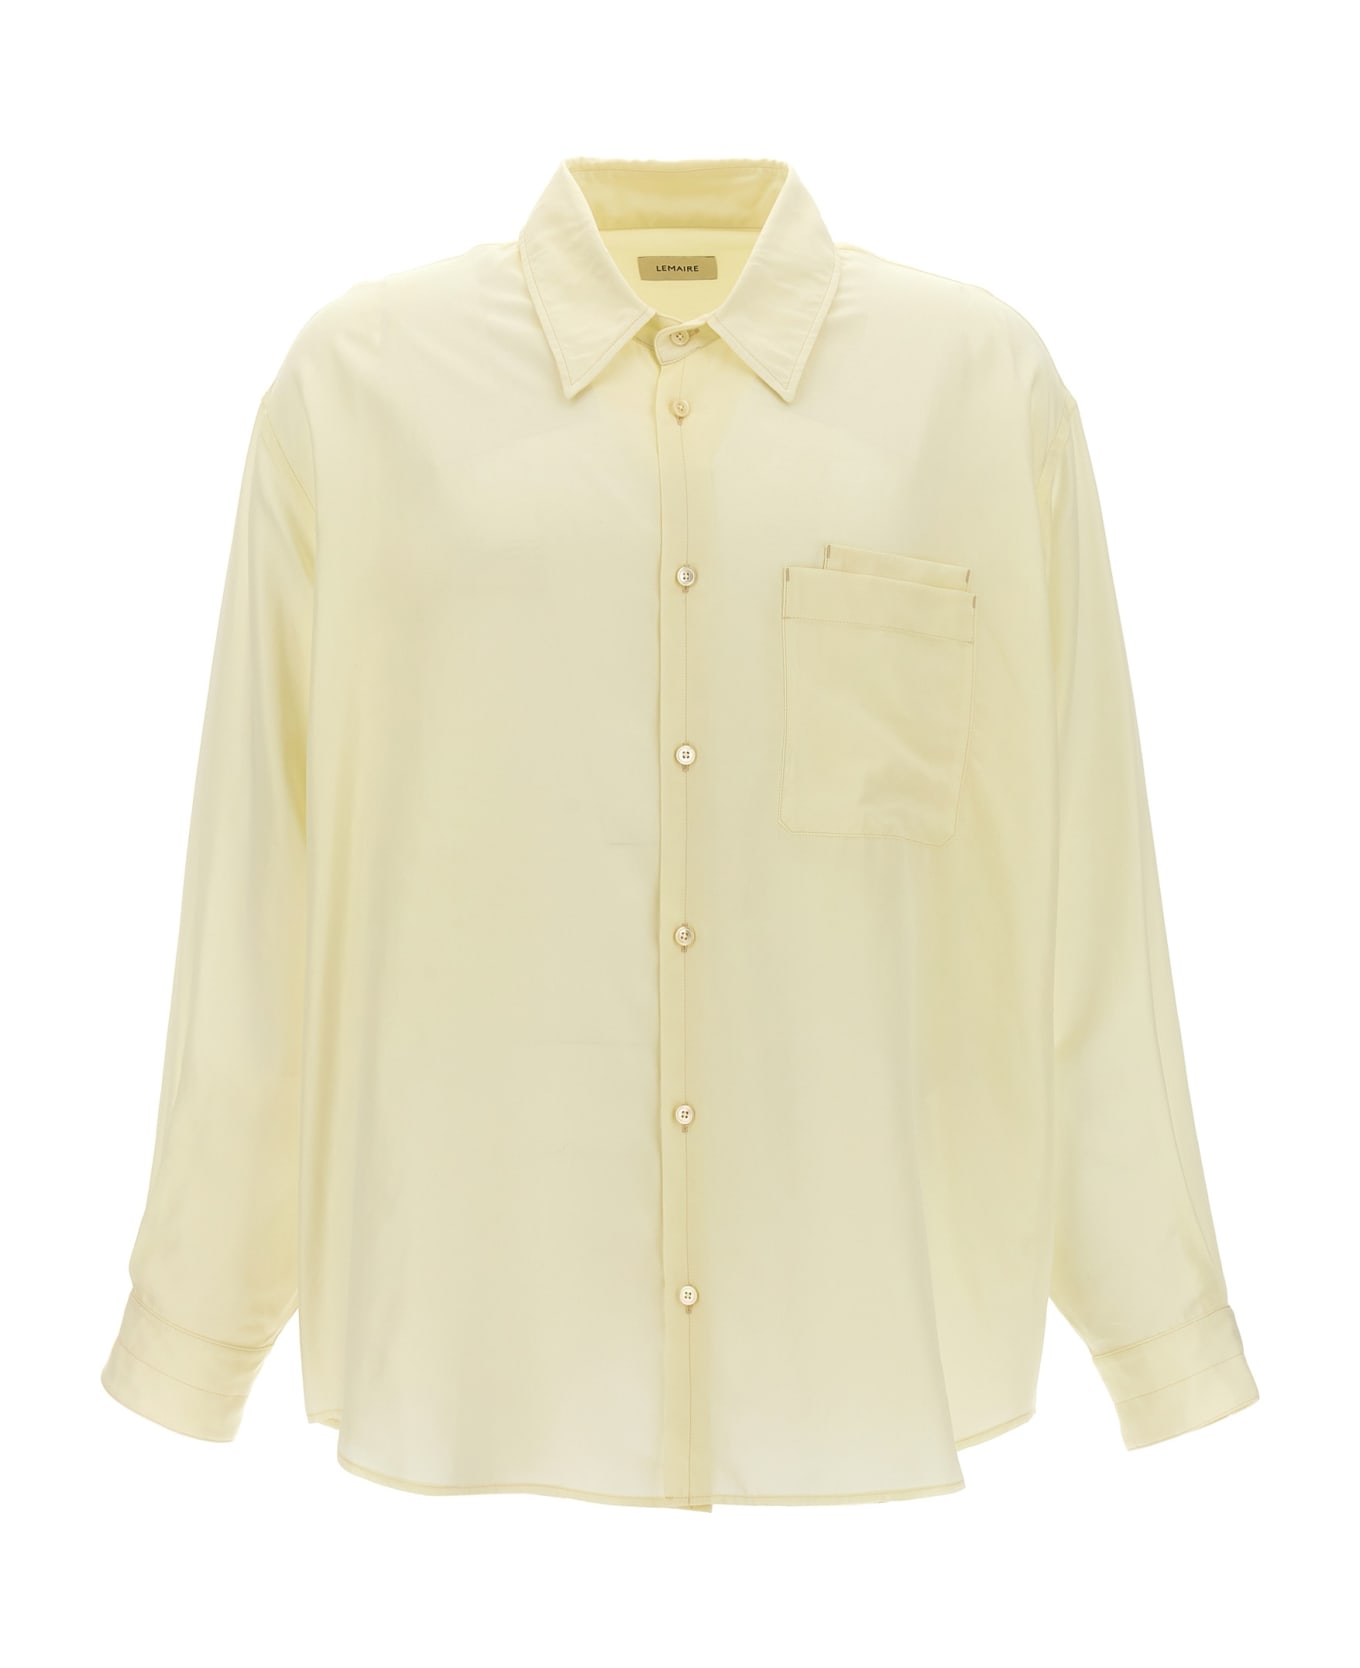 Lemaire 'double Pocket' Shirt - White